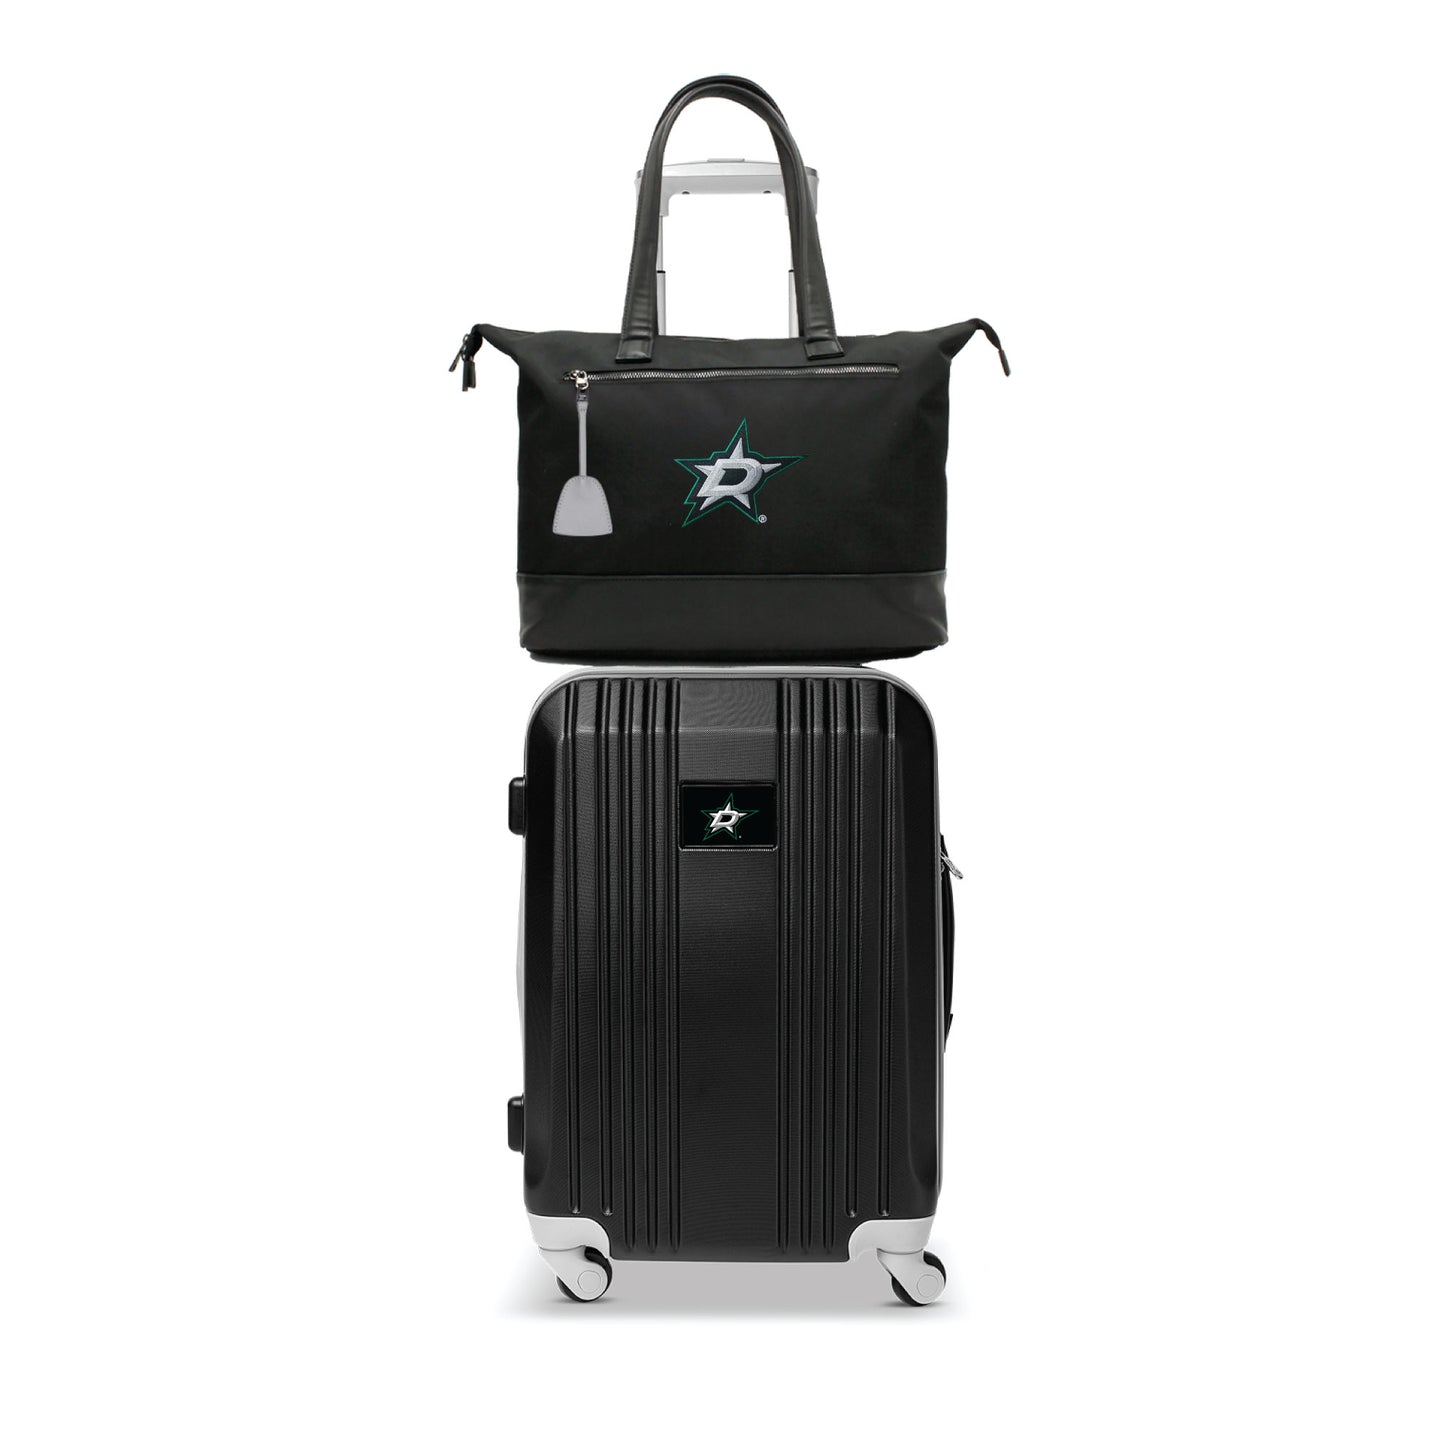 Dallas Stars Premium Laptop Tote Bag and Luggage Set